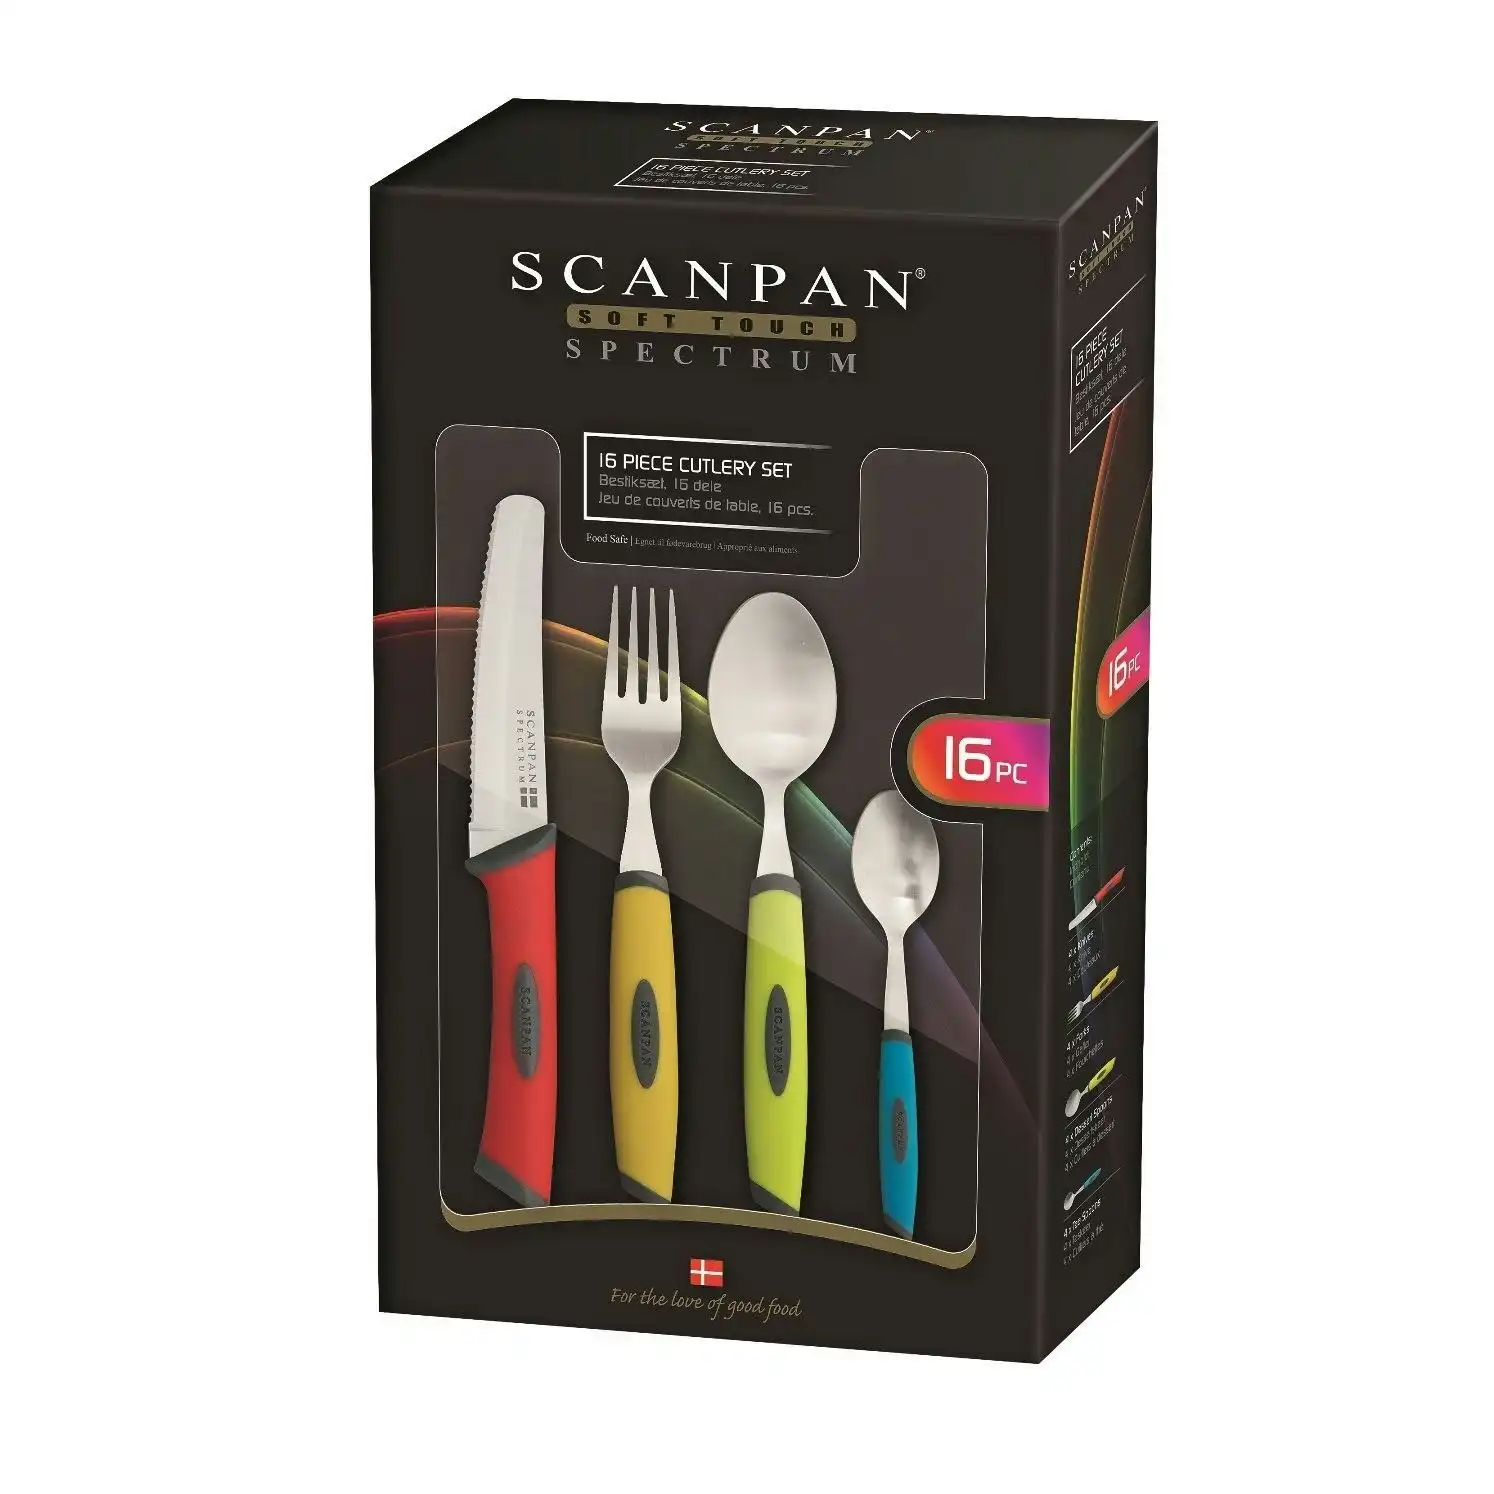 Scanpan Soft Touch Spectrum 16 Piece Cutlery Set   Coloured